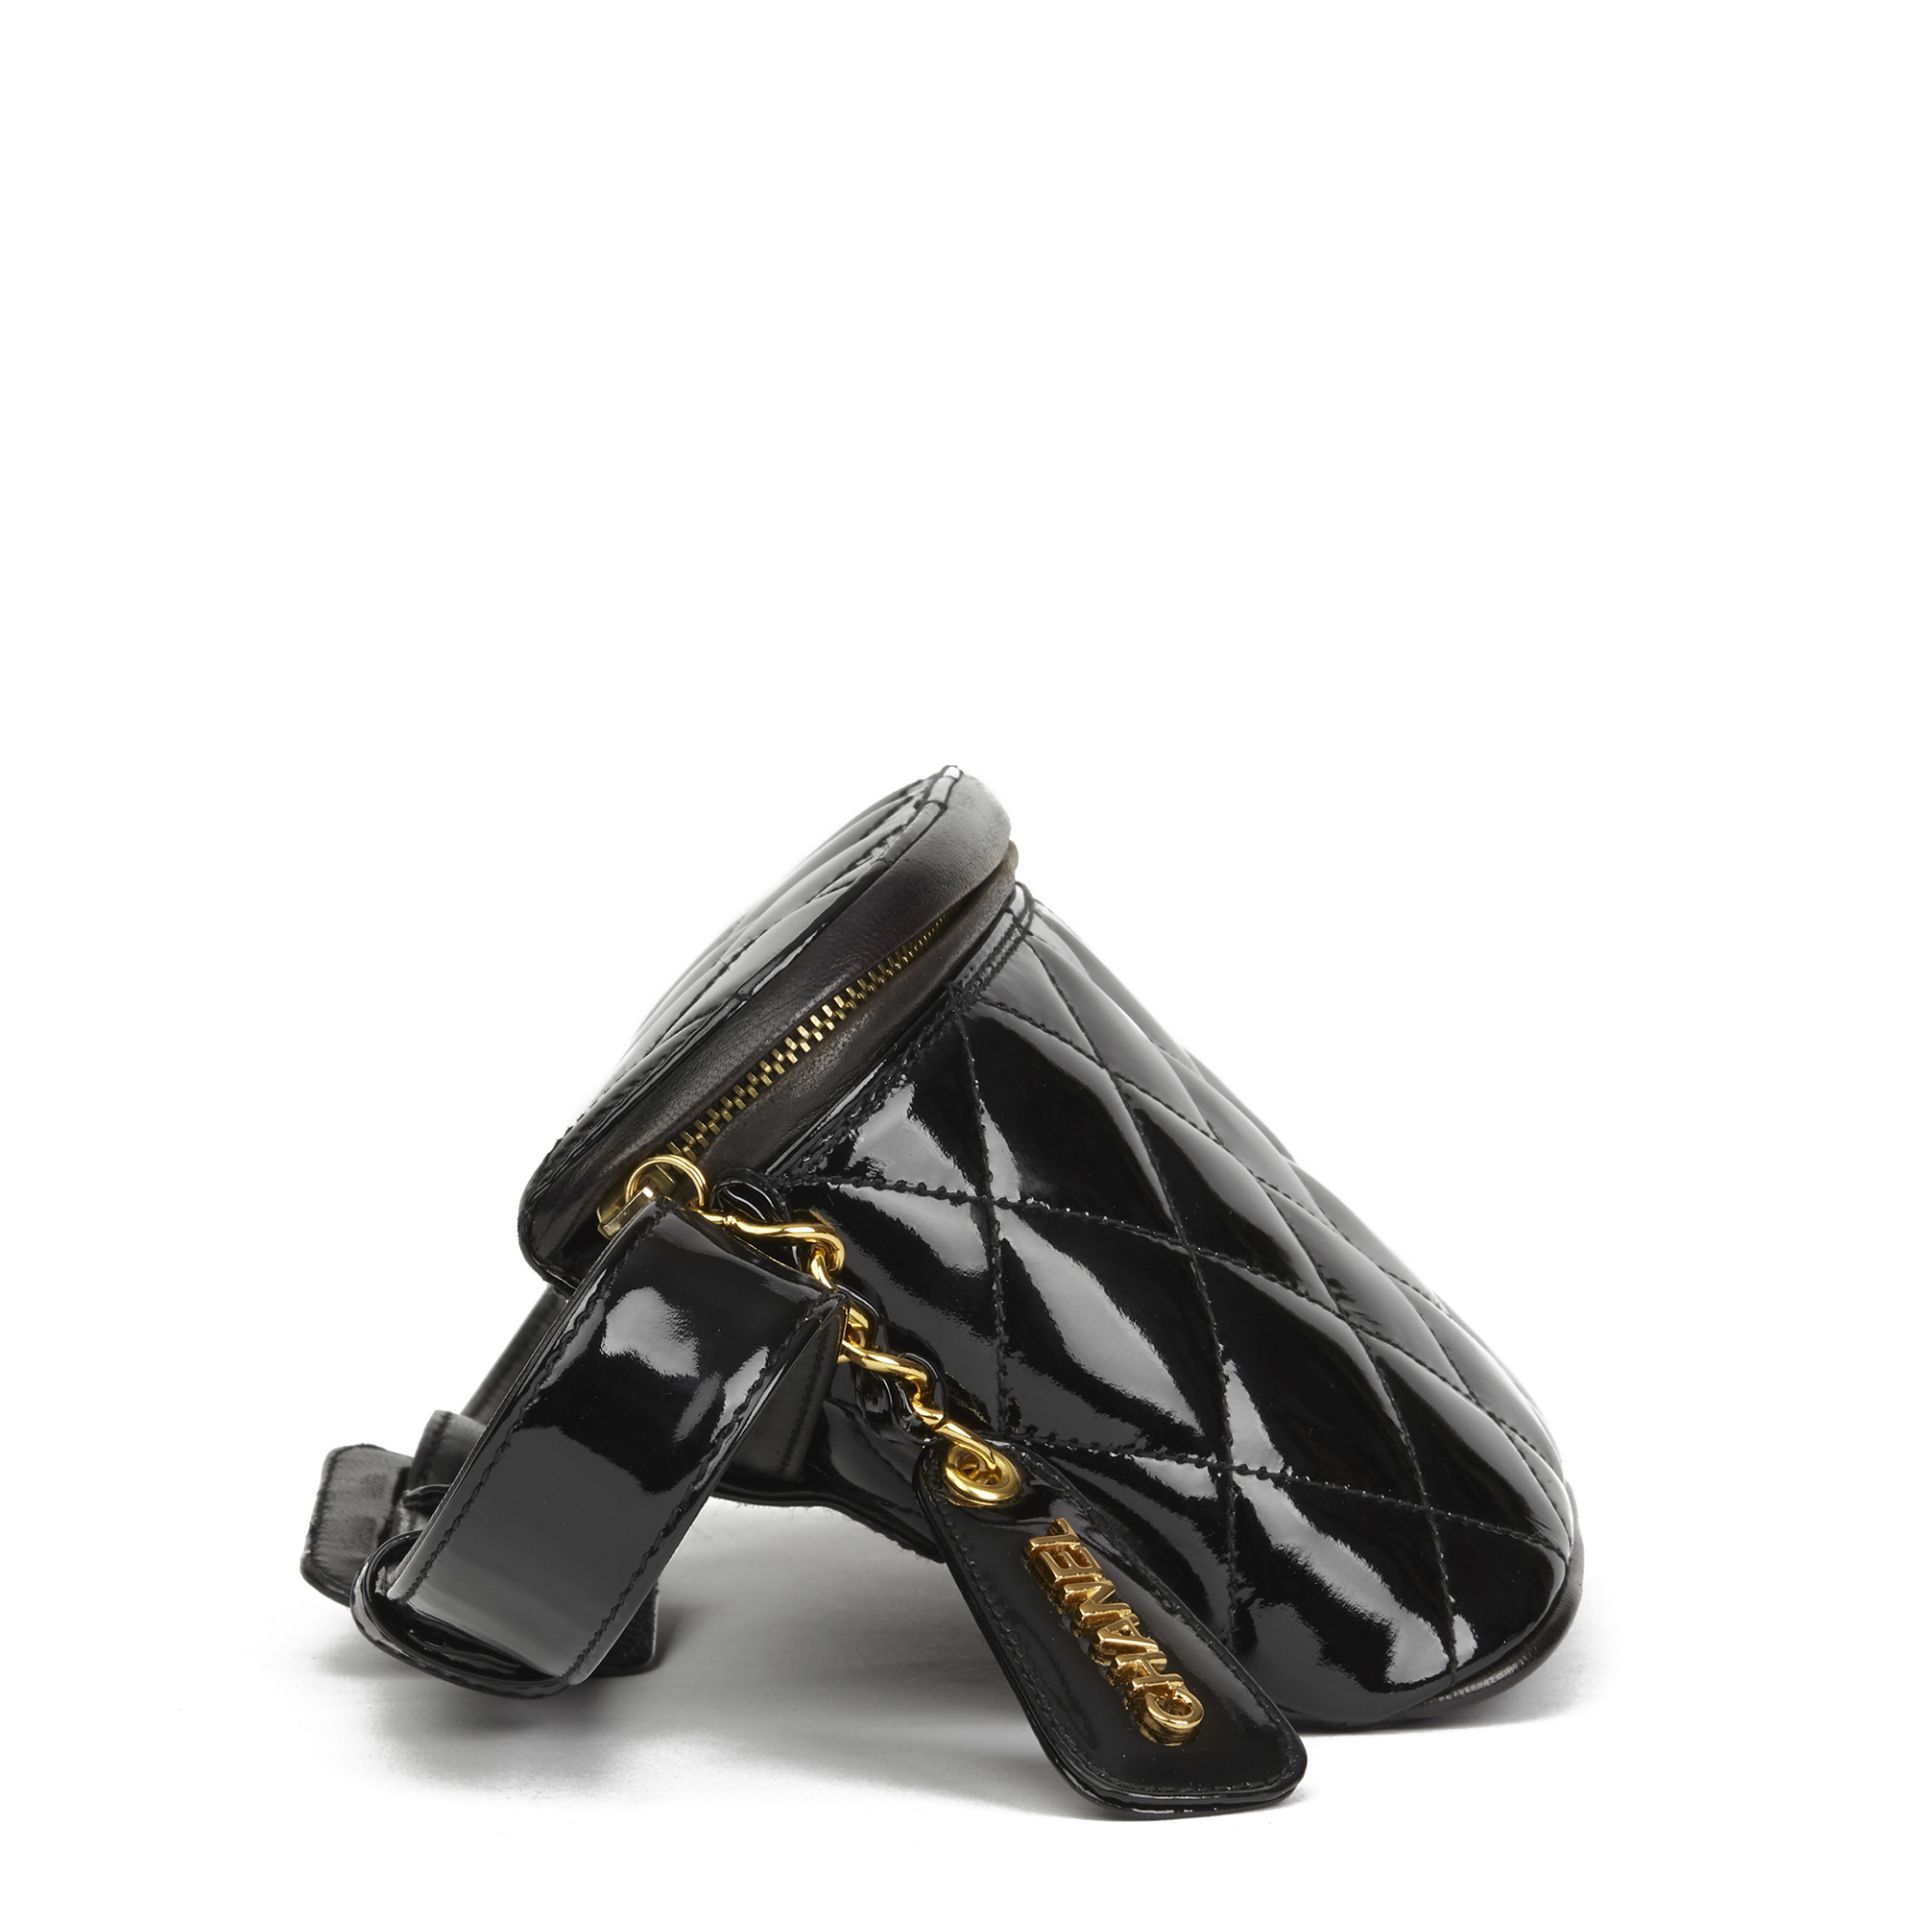 Chanel Black Quilted Patent Leather Vintage Timeless Belt Bag - Image 12 of 12